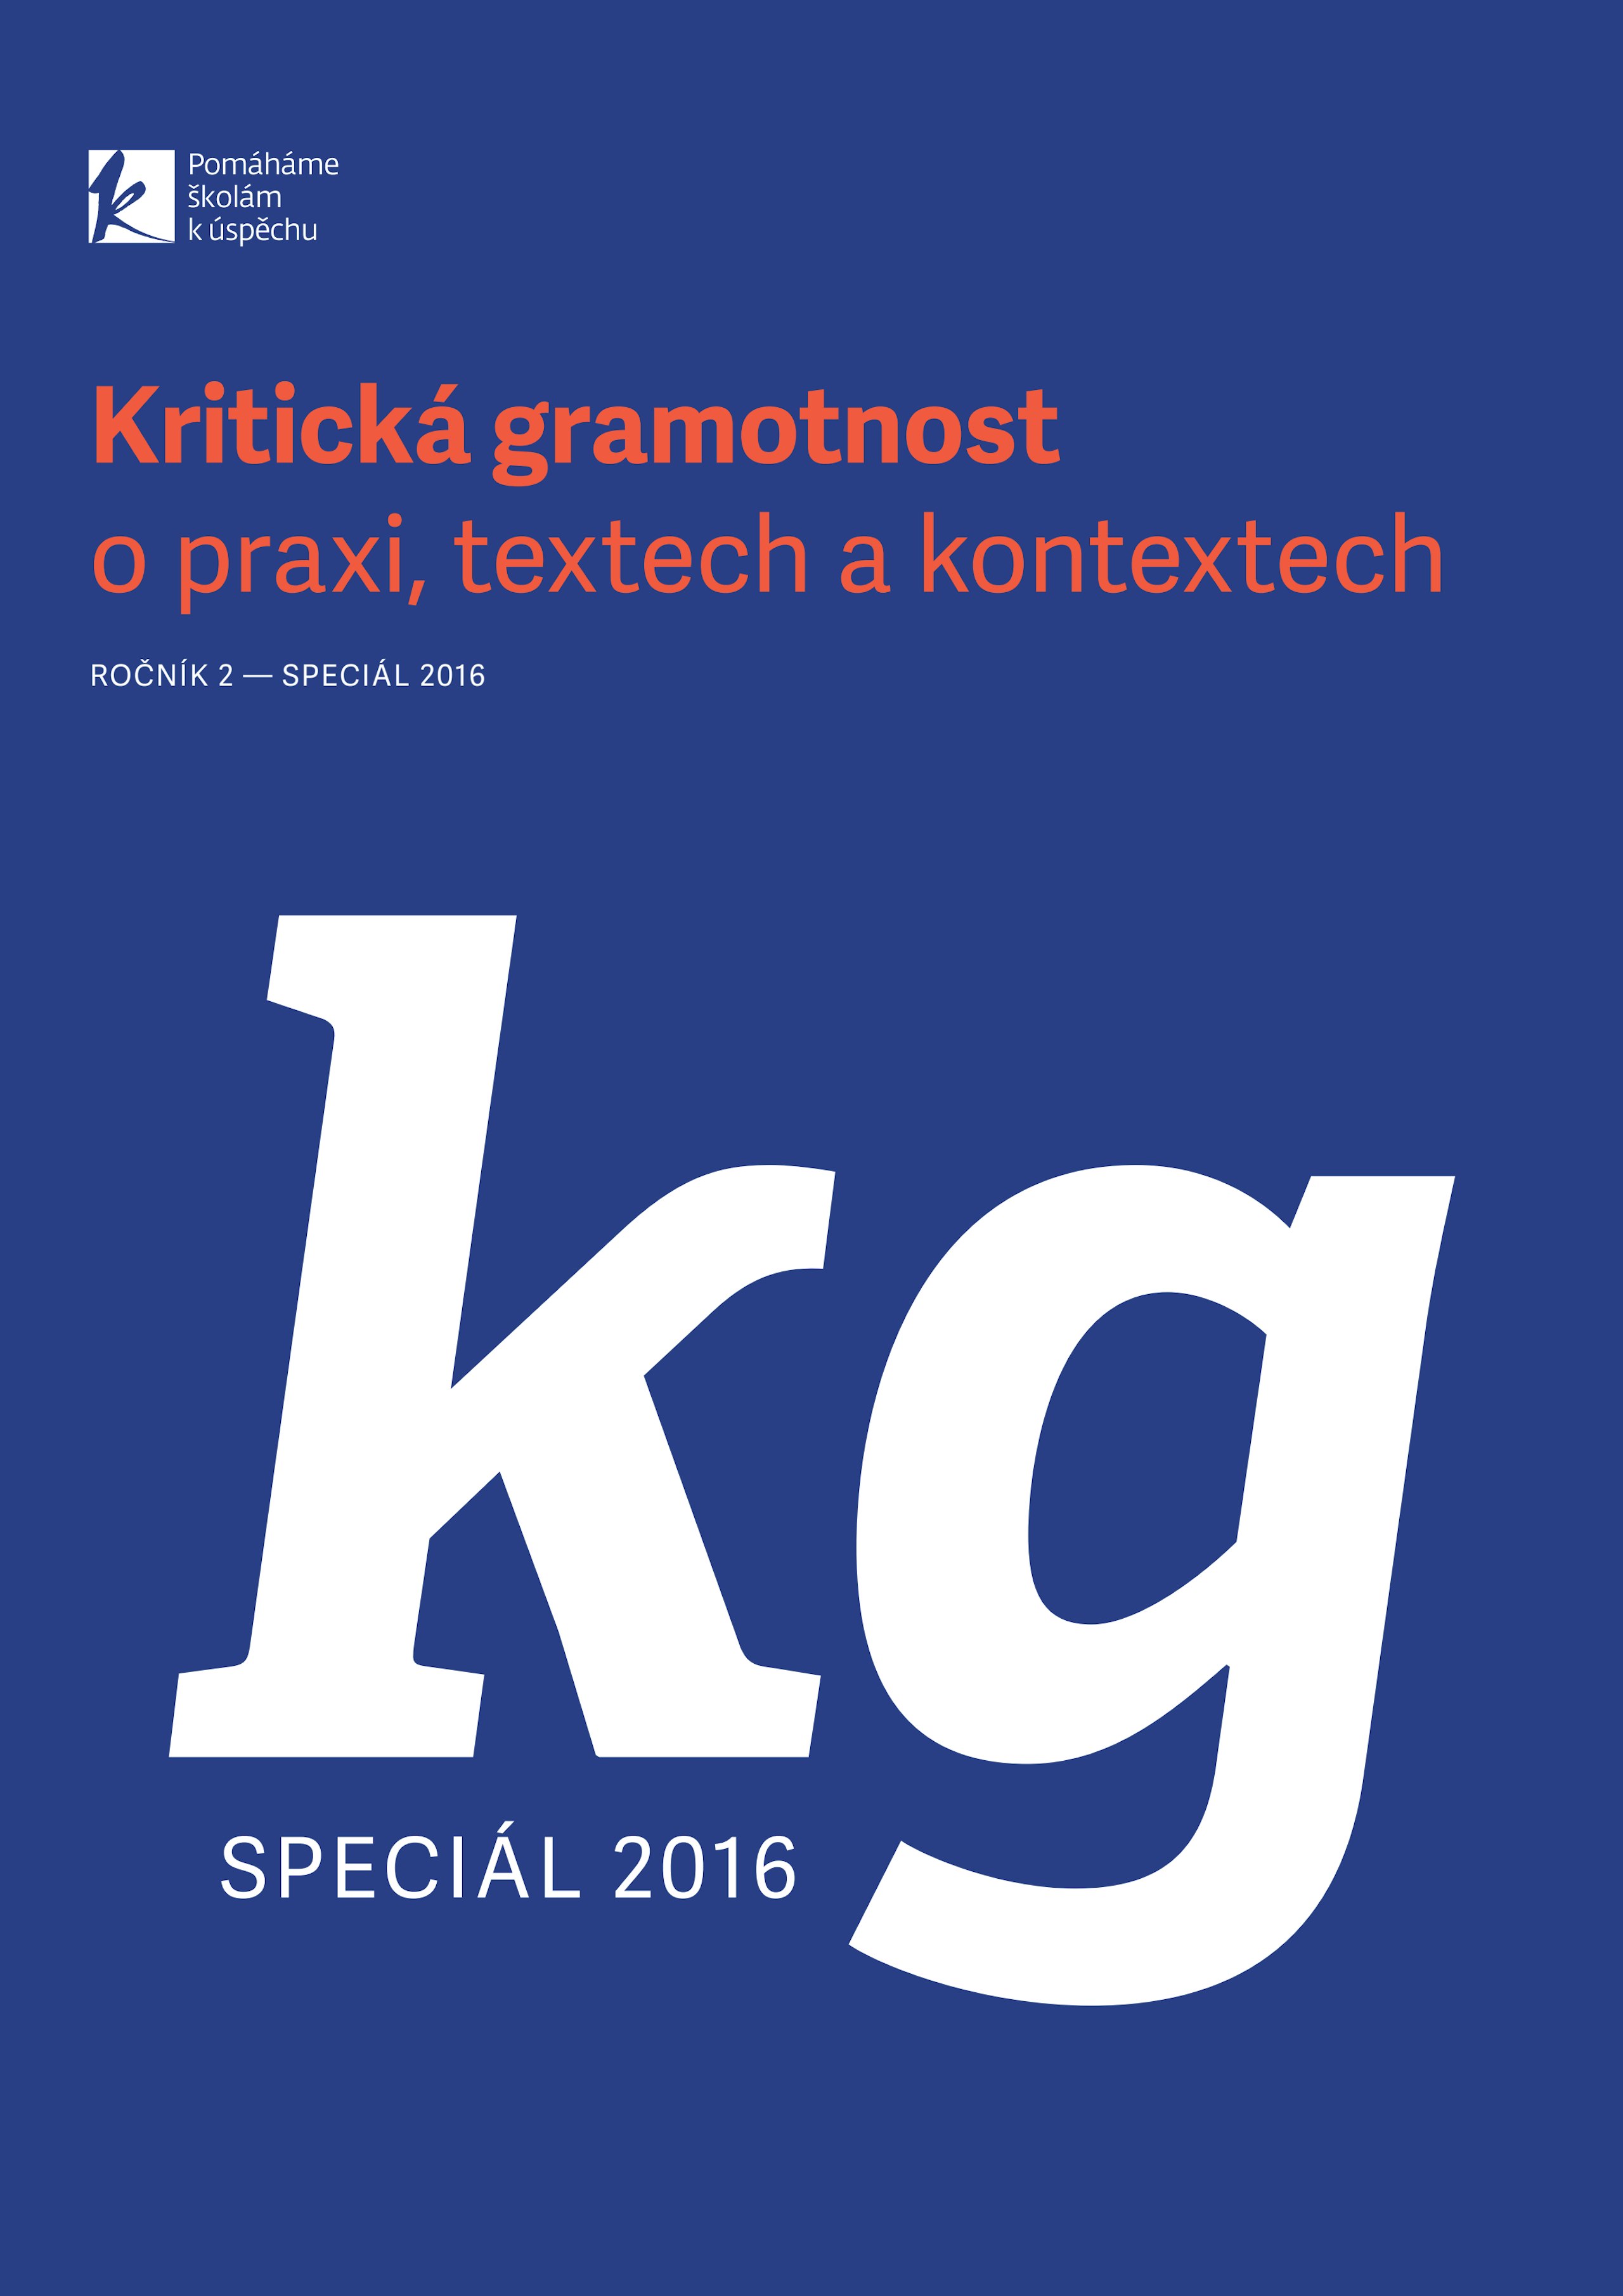 kriticka-gramotnost-special-leto-2016-e-verze.pdf